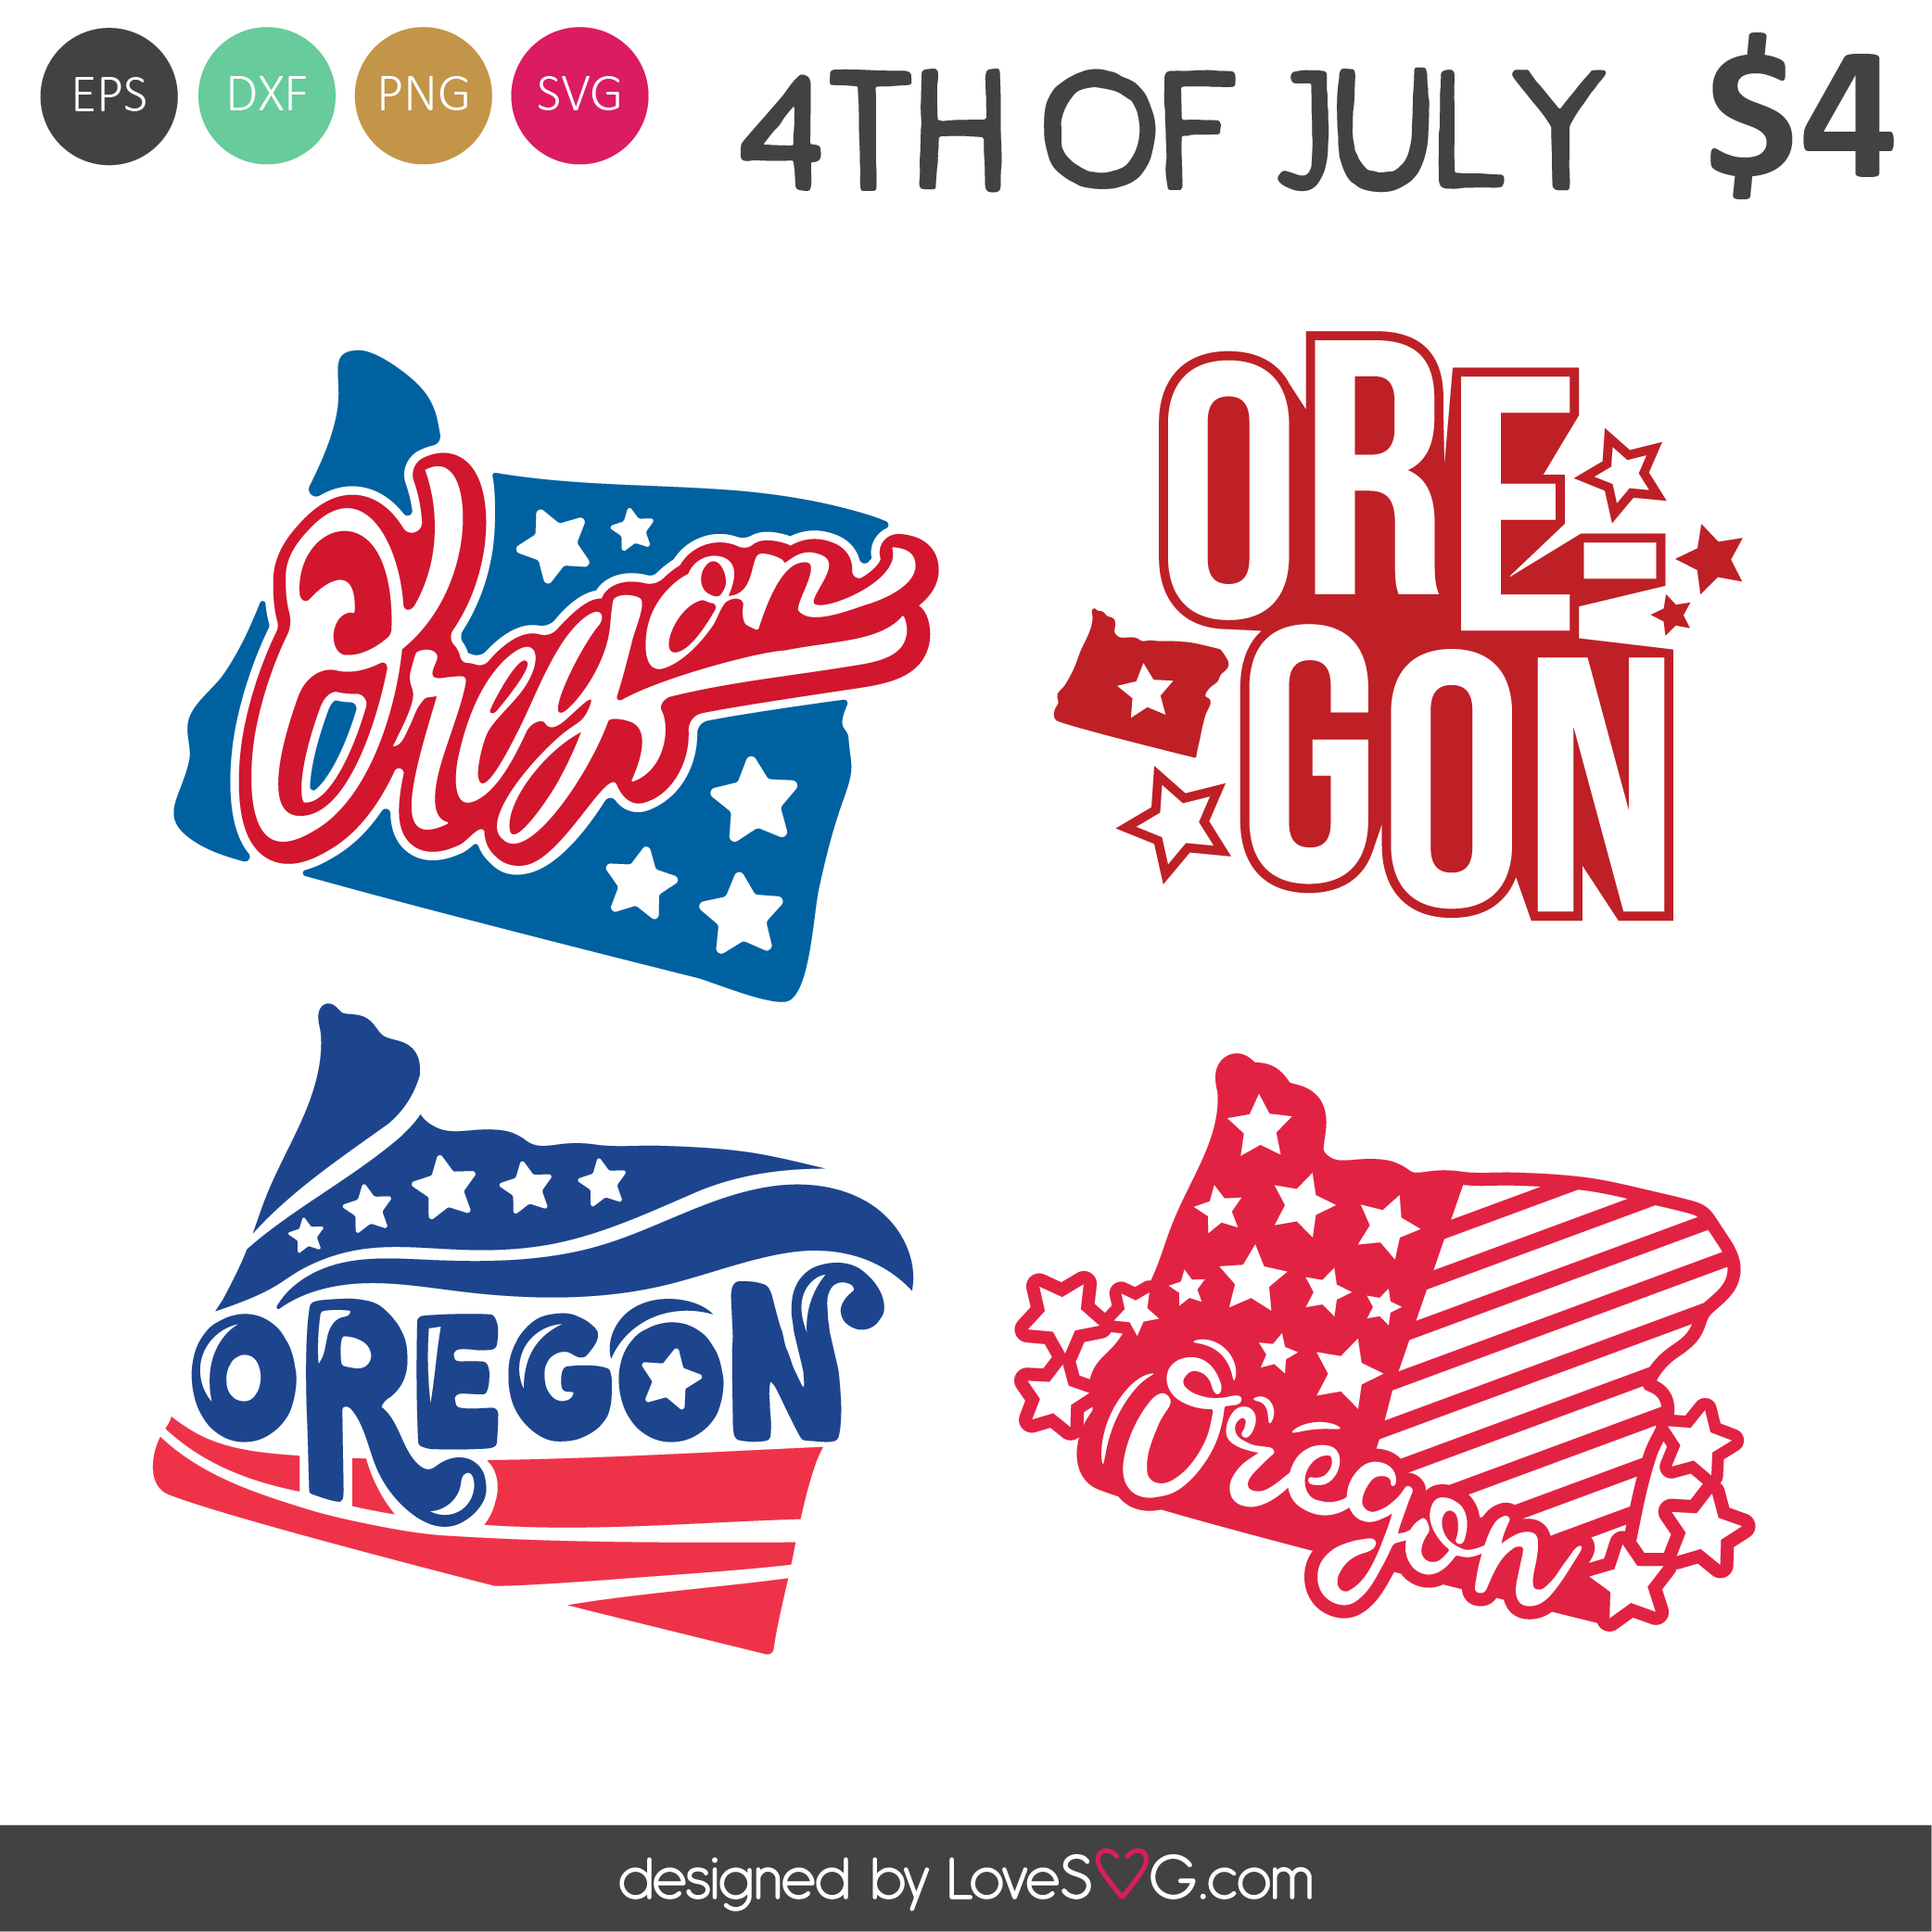 Oregon SVG Cut Files - Lovesvg.com